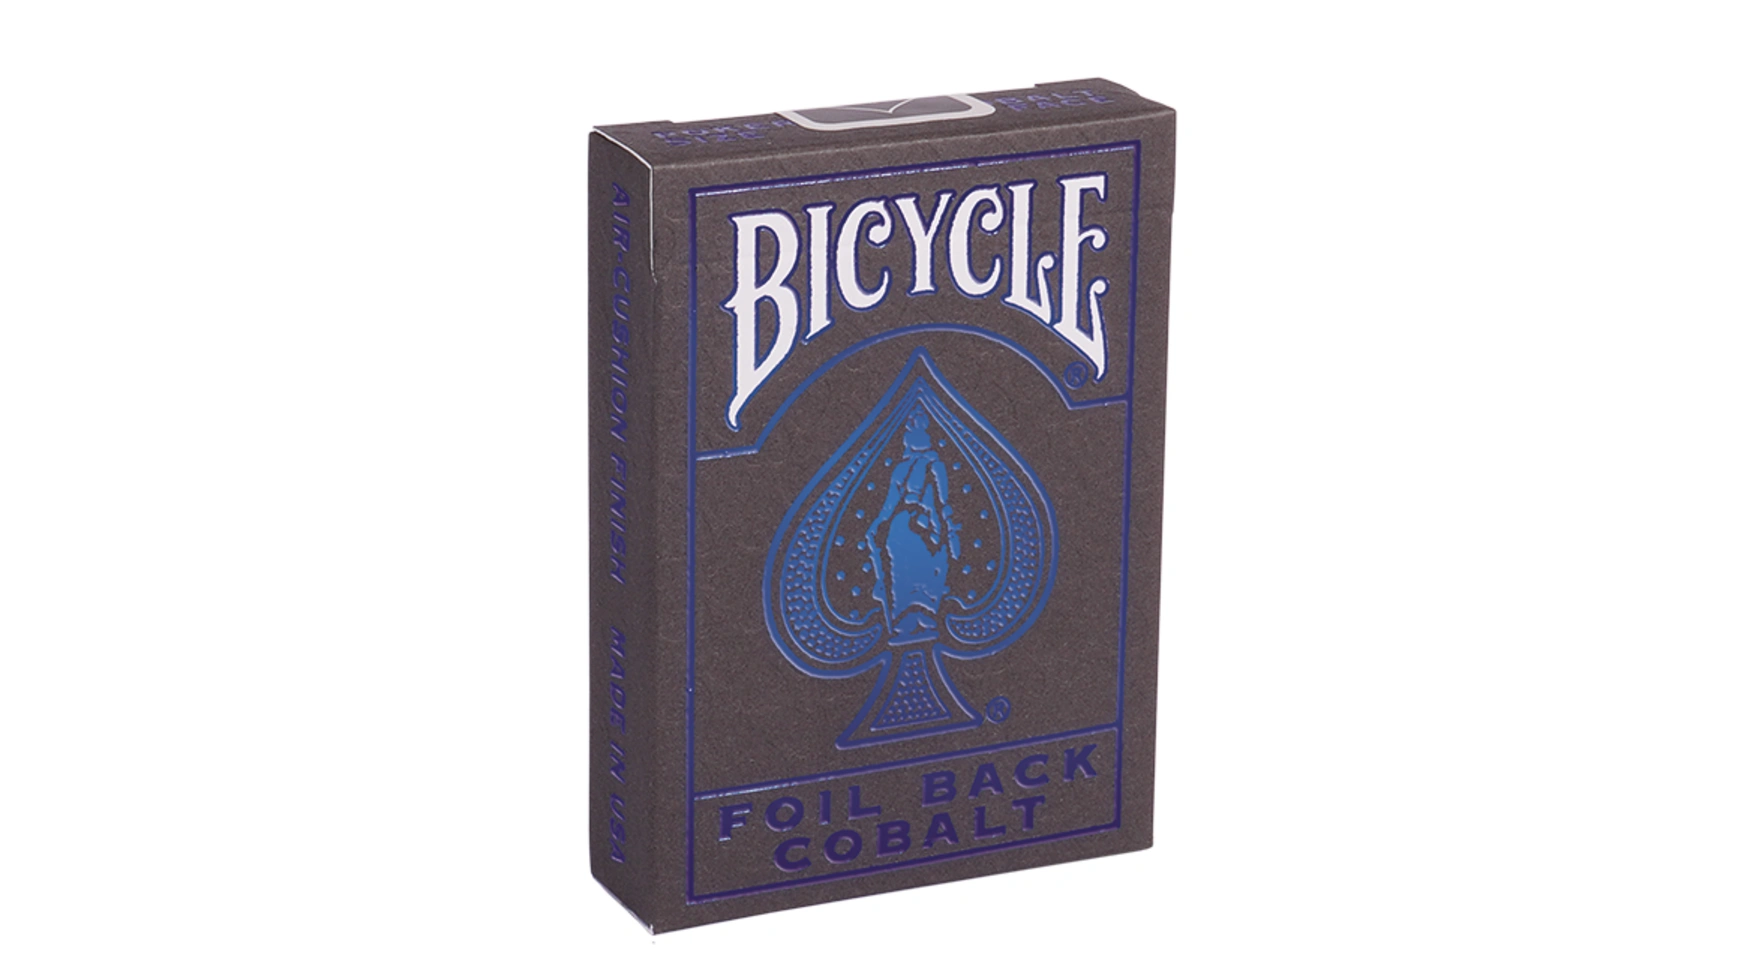 Bicycle игральные карты Metalluxe Blue карты bicycle aristocrat vintage red blue